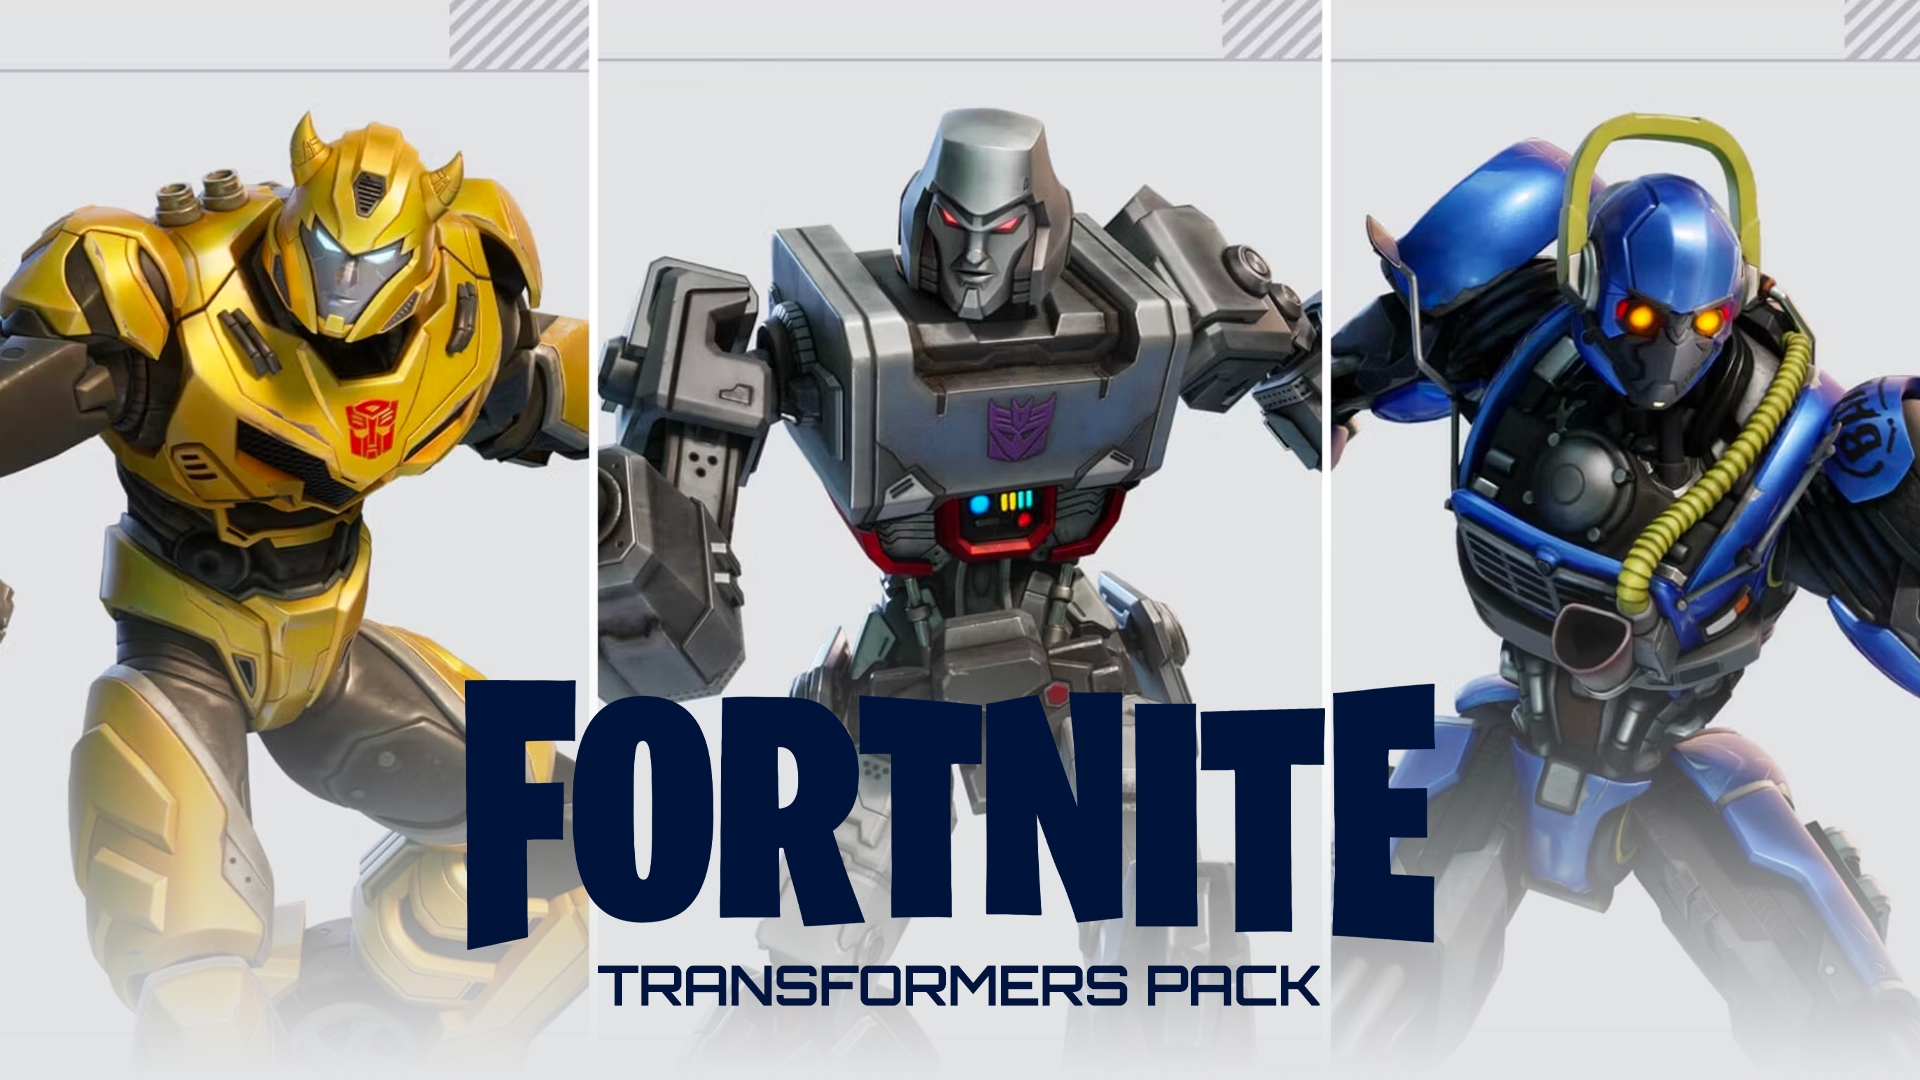 Fortnite - Transformers Pack, PlayStation 4